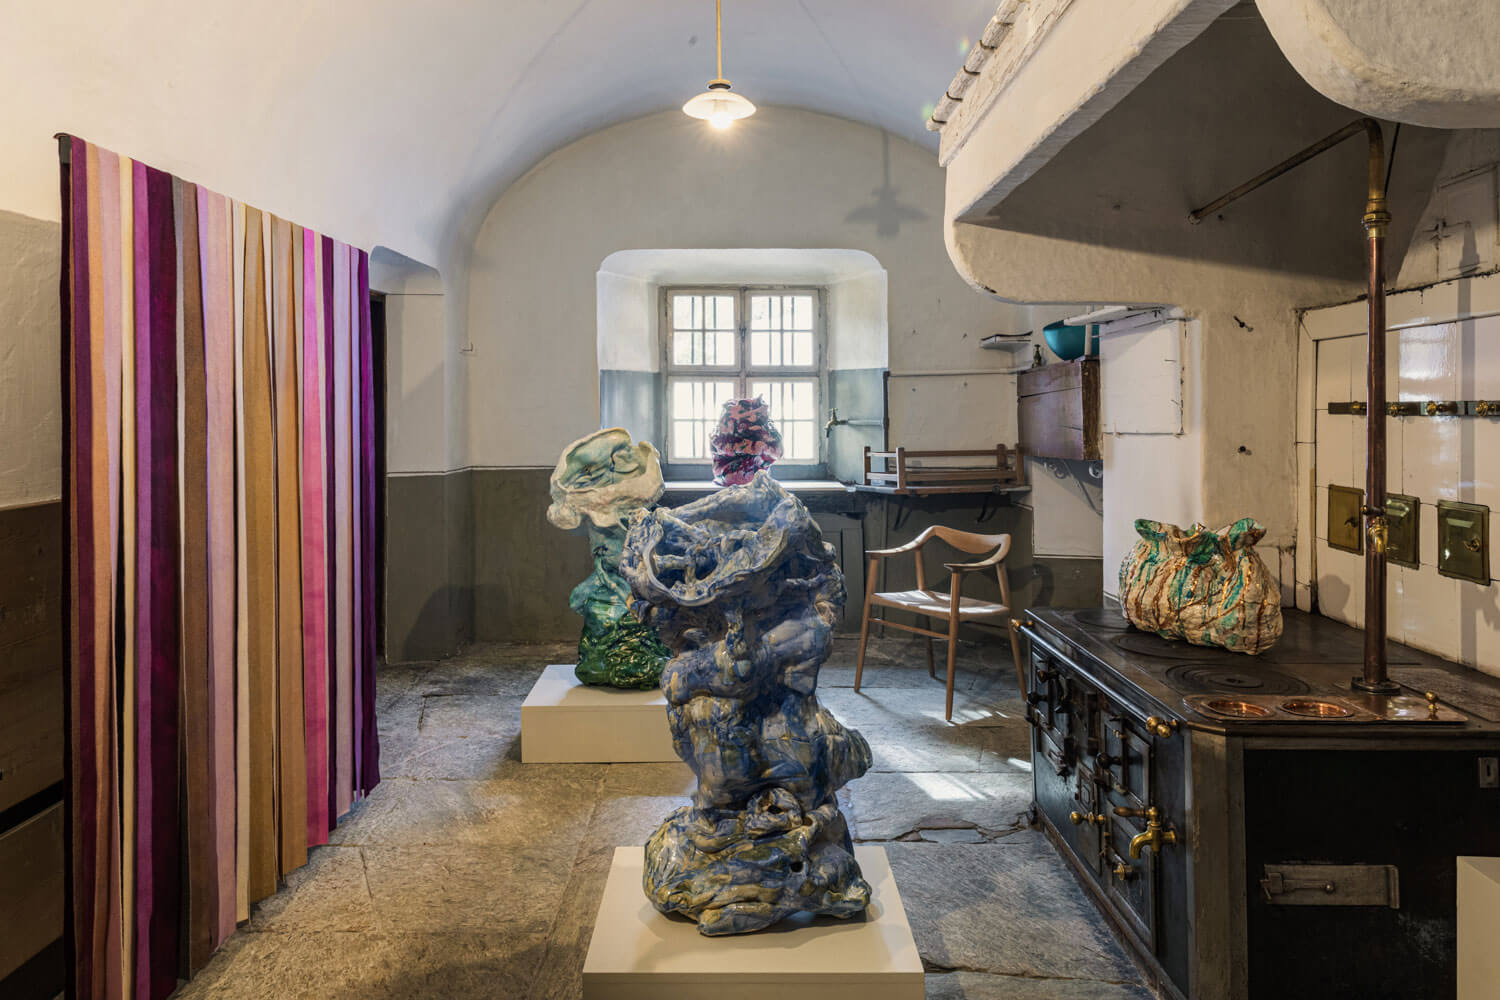 St. Moritz Buzzing with Art, Fashion, Food Projects – WWD